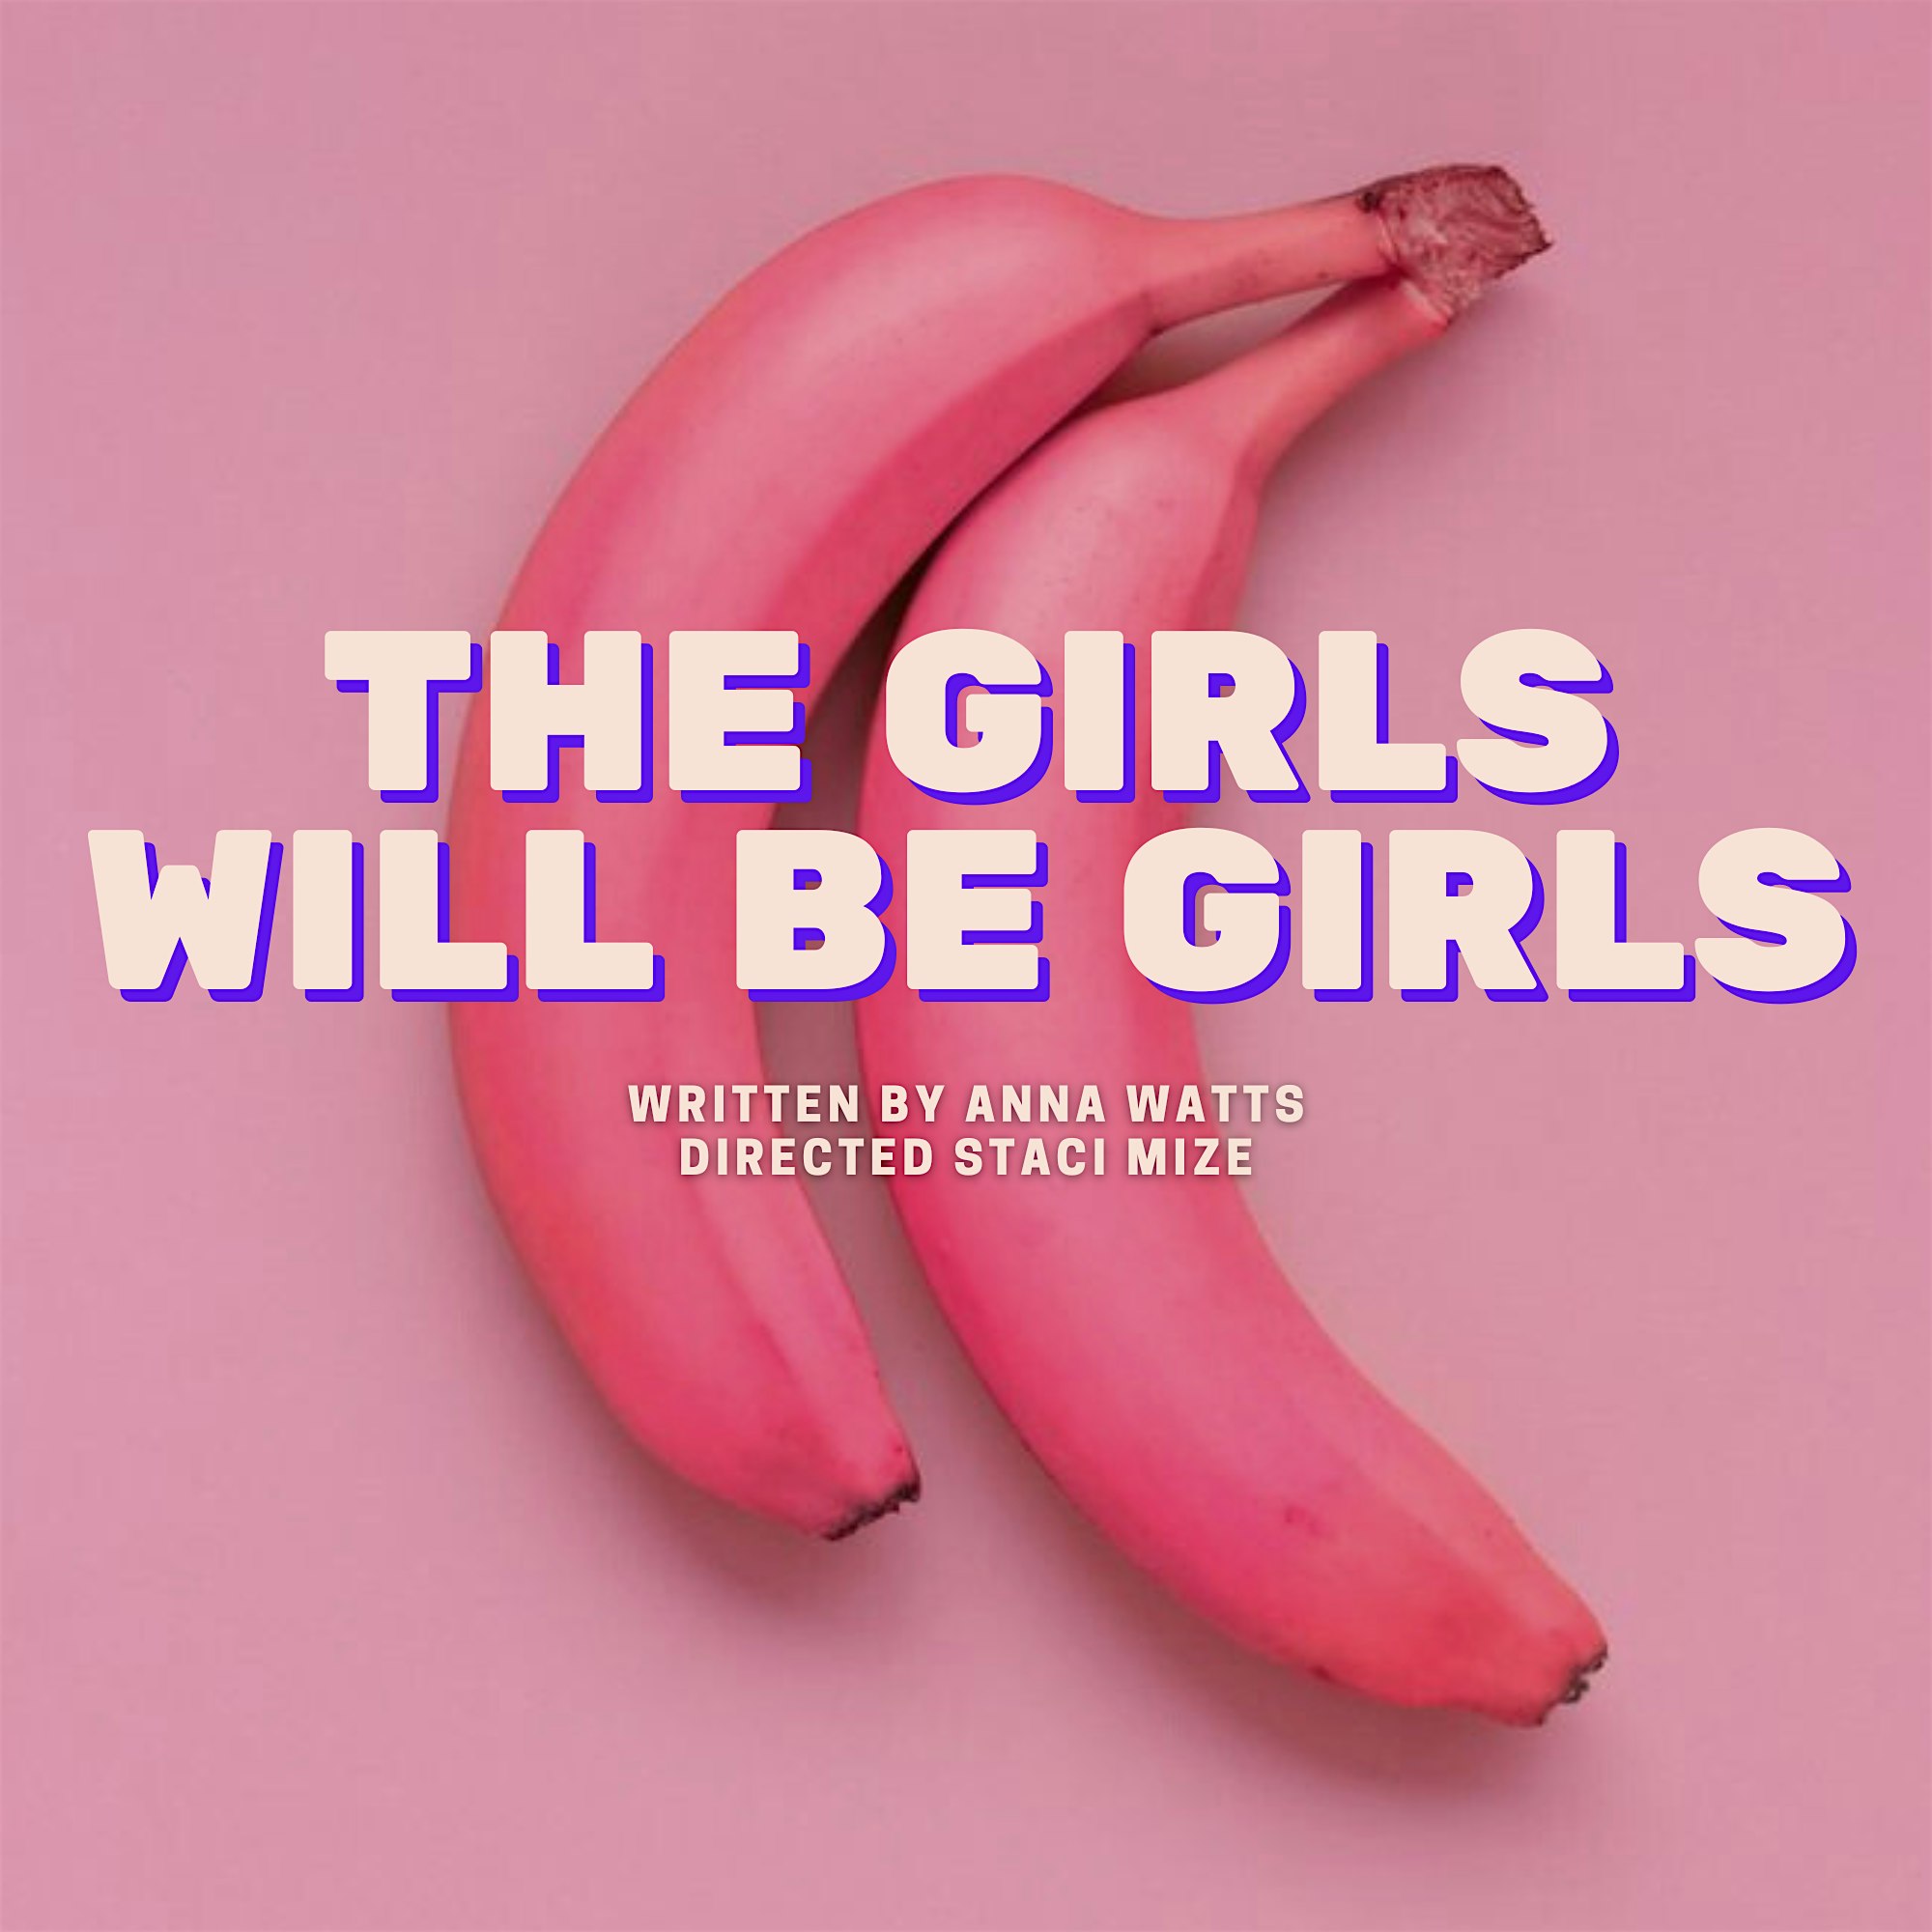 THE GIRLS WILL BE GIRLS